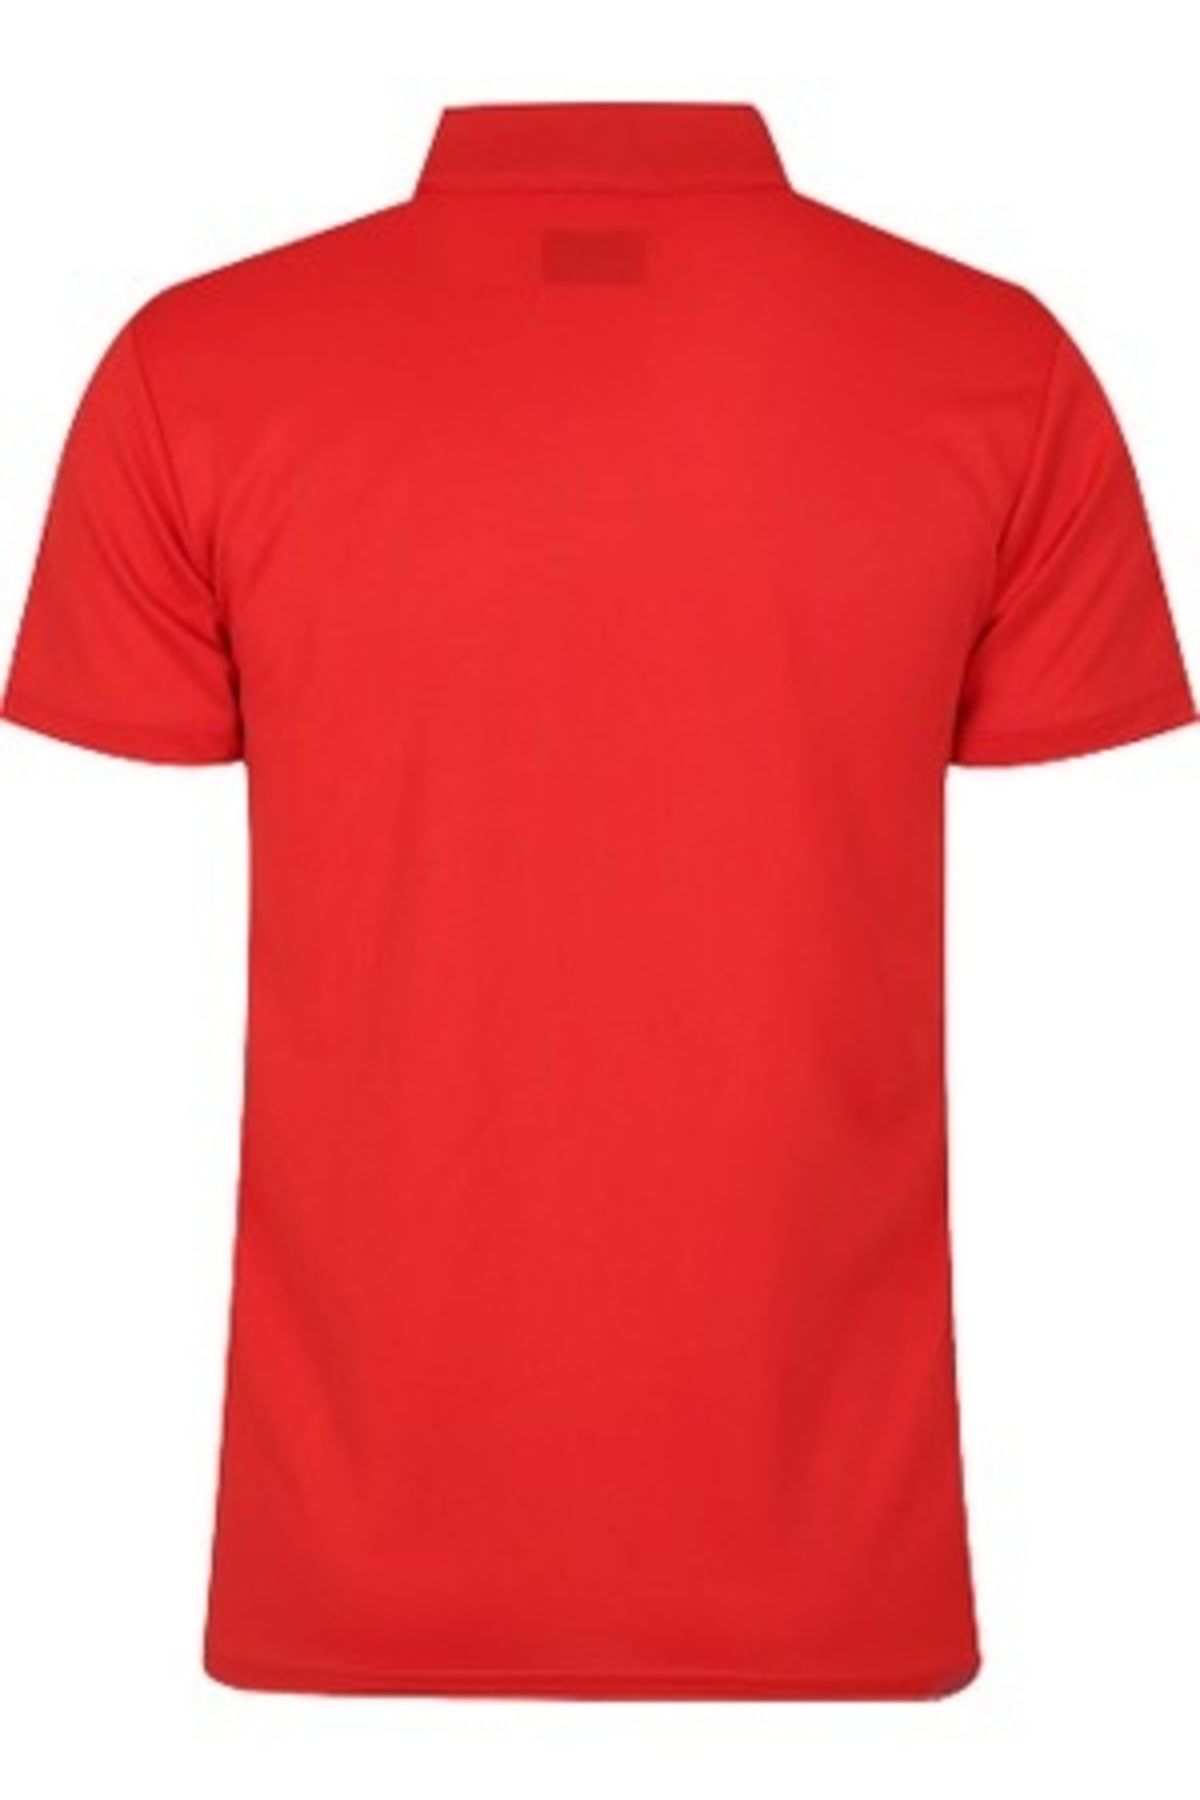 uhlsport تی شرت yaka چوگان قرمز را مسواک بزنید